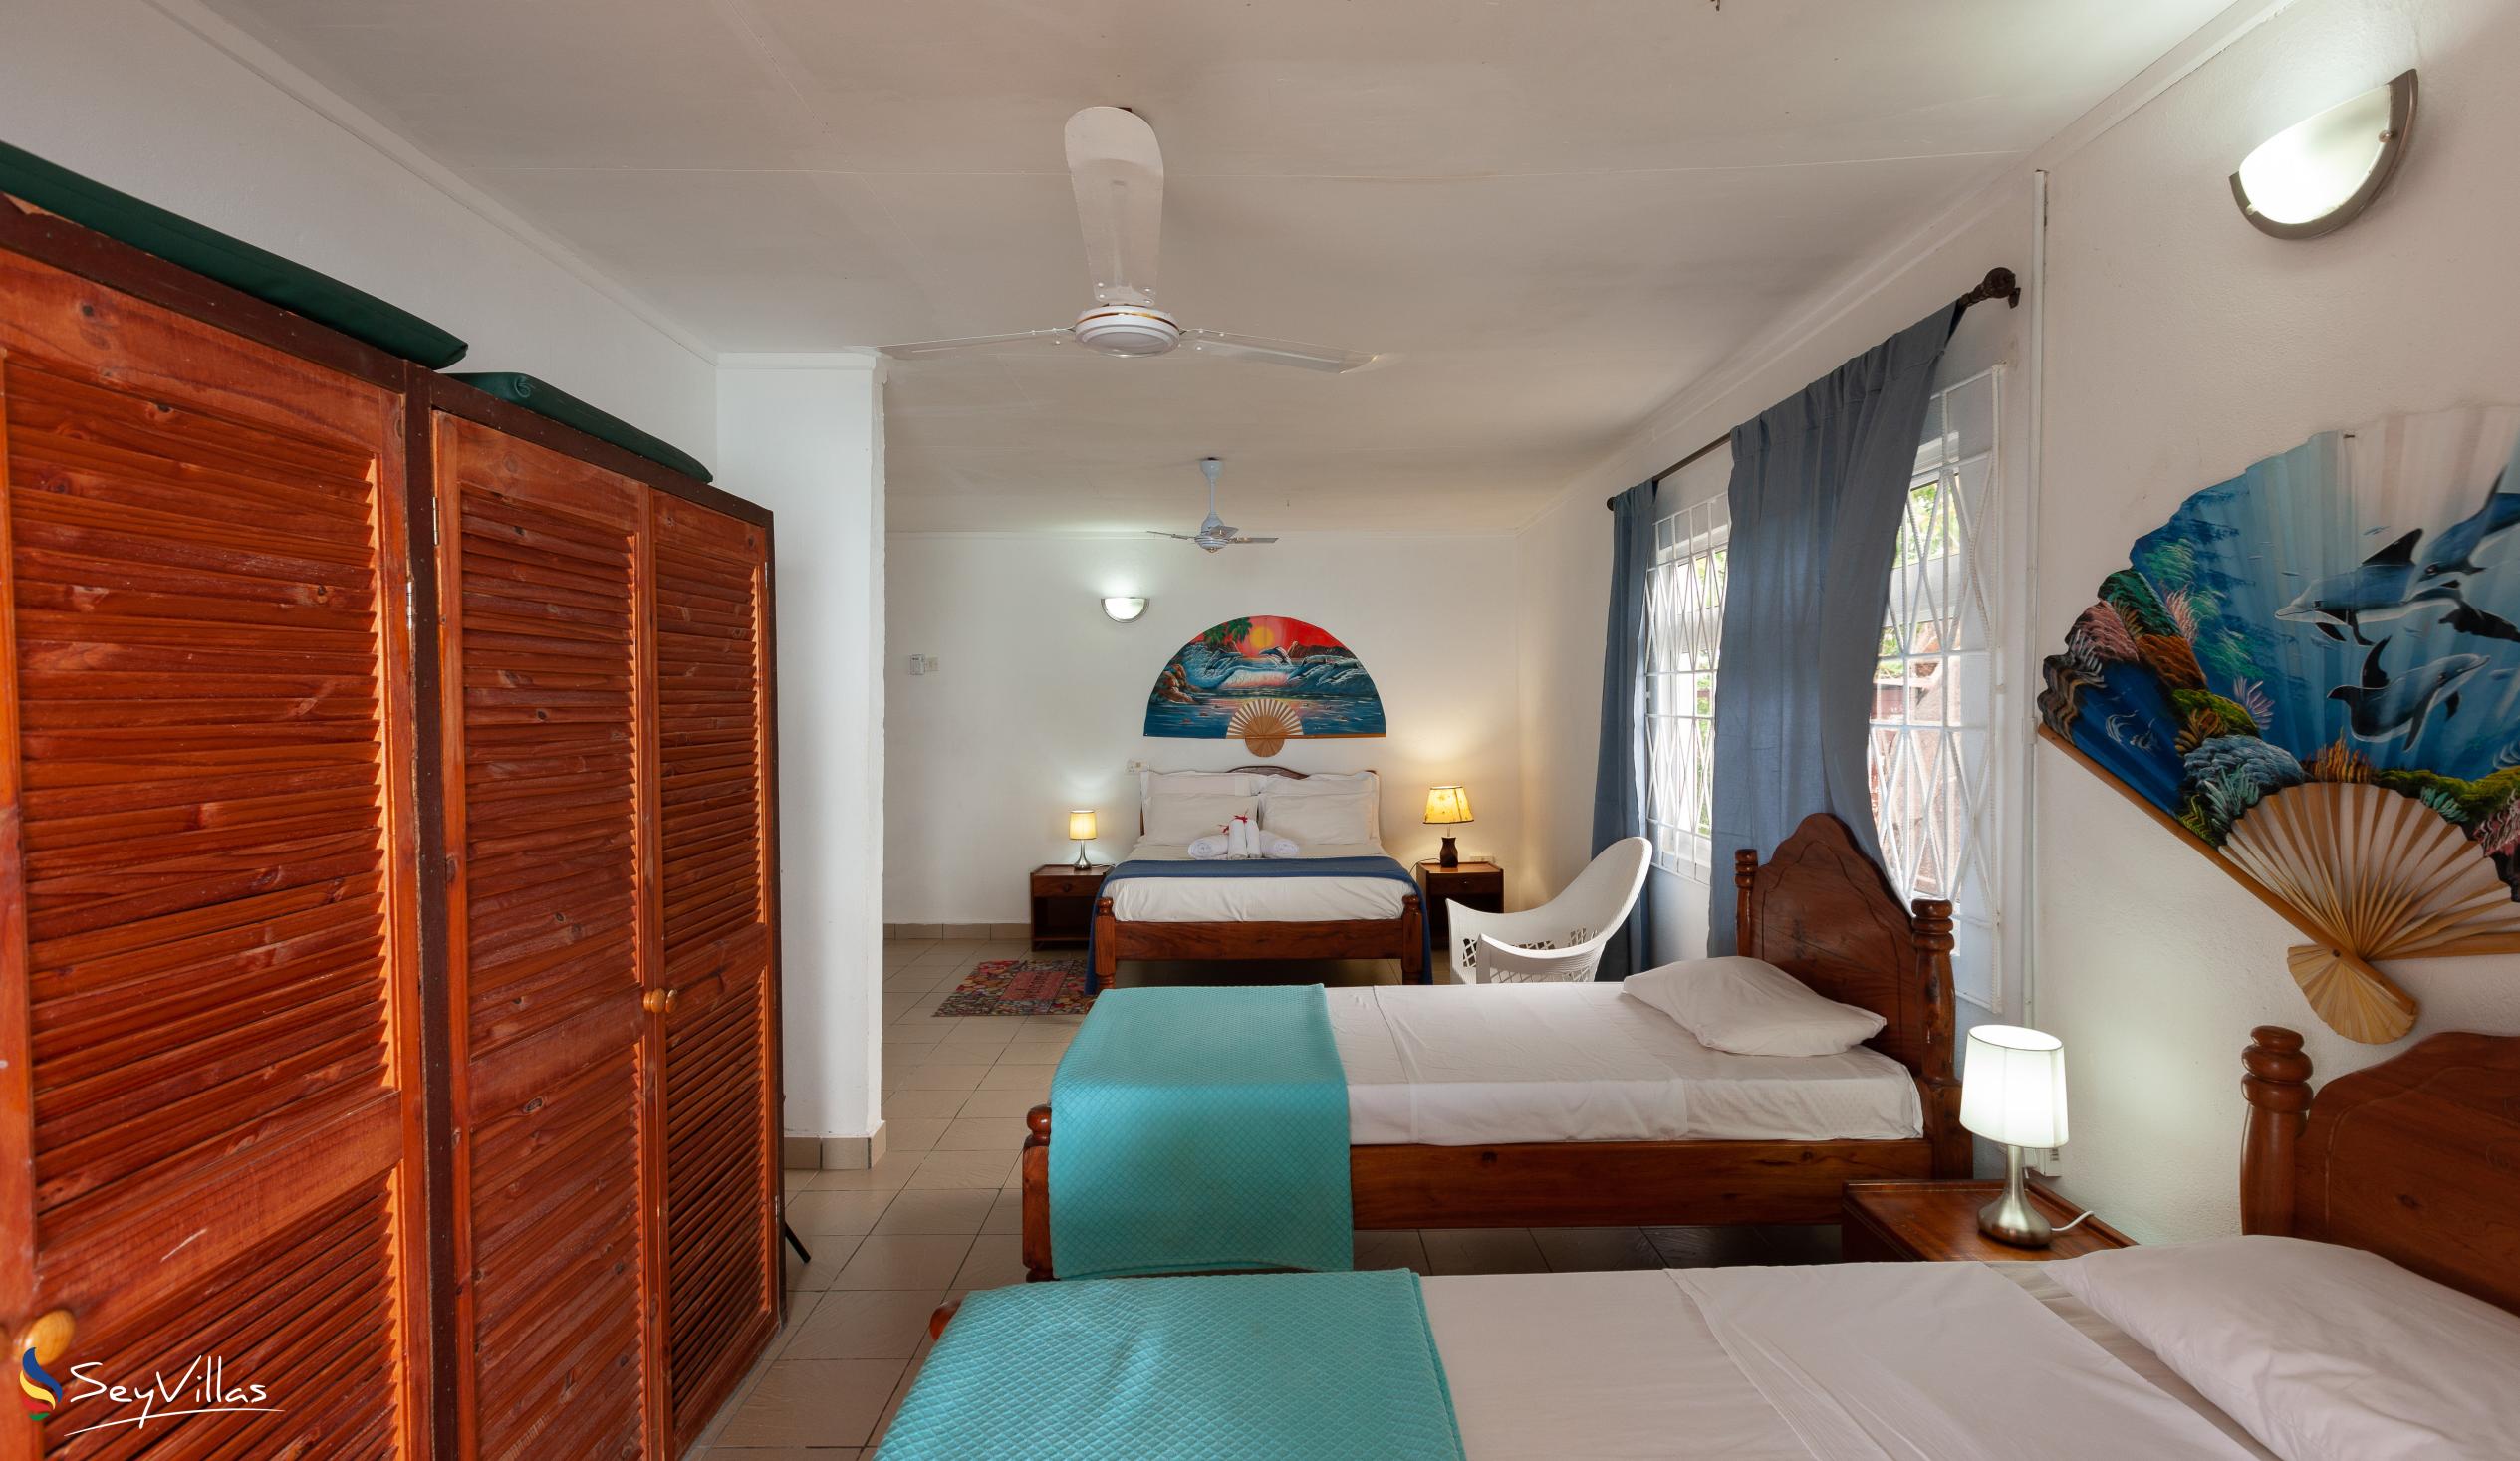 Photo 42: Maison du Soleil - 2-Bedroom Villa - Praslin (Seychelles)